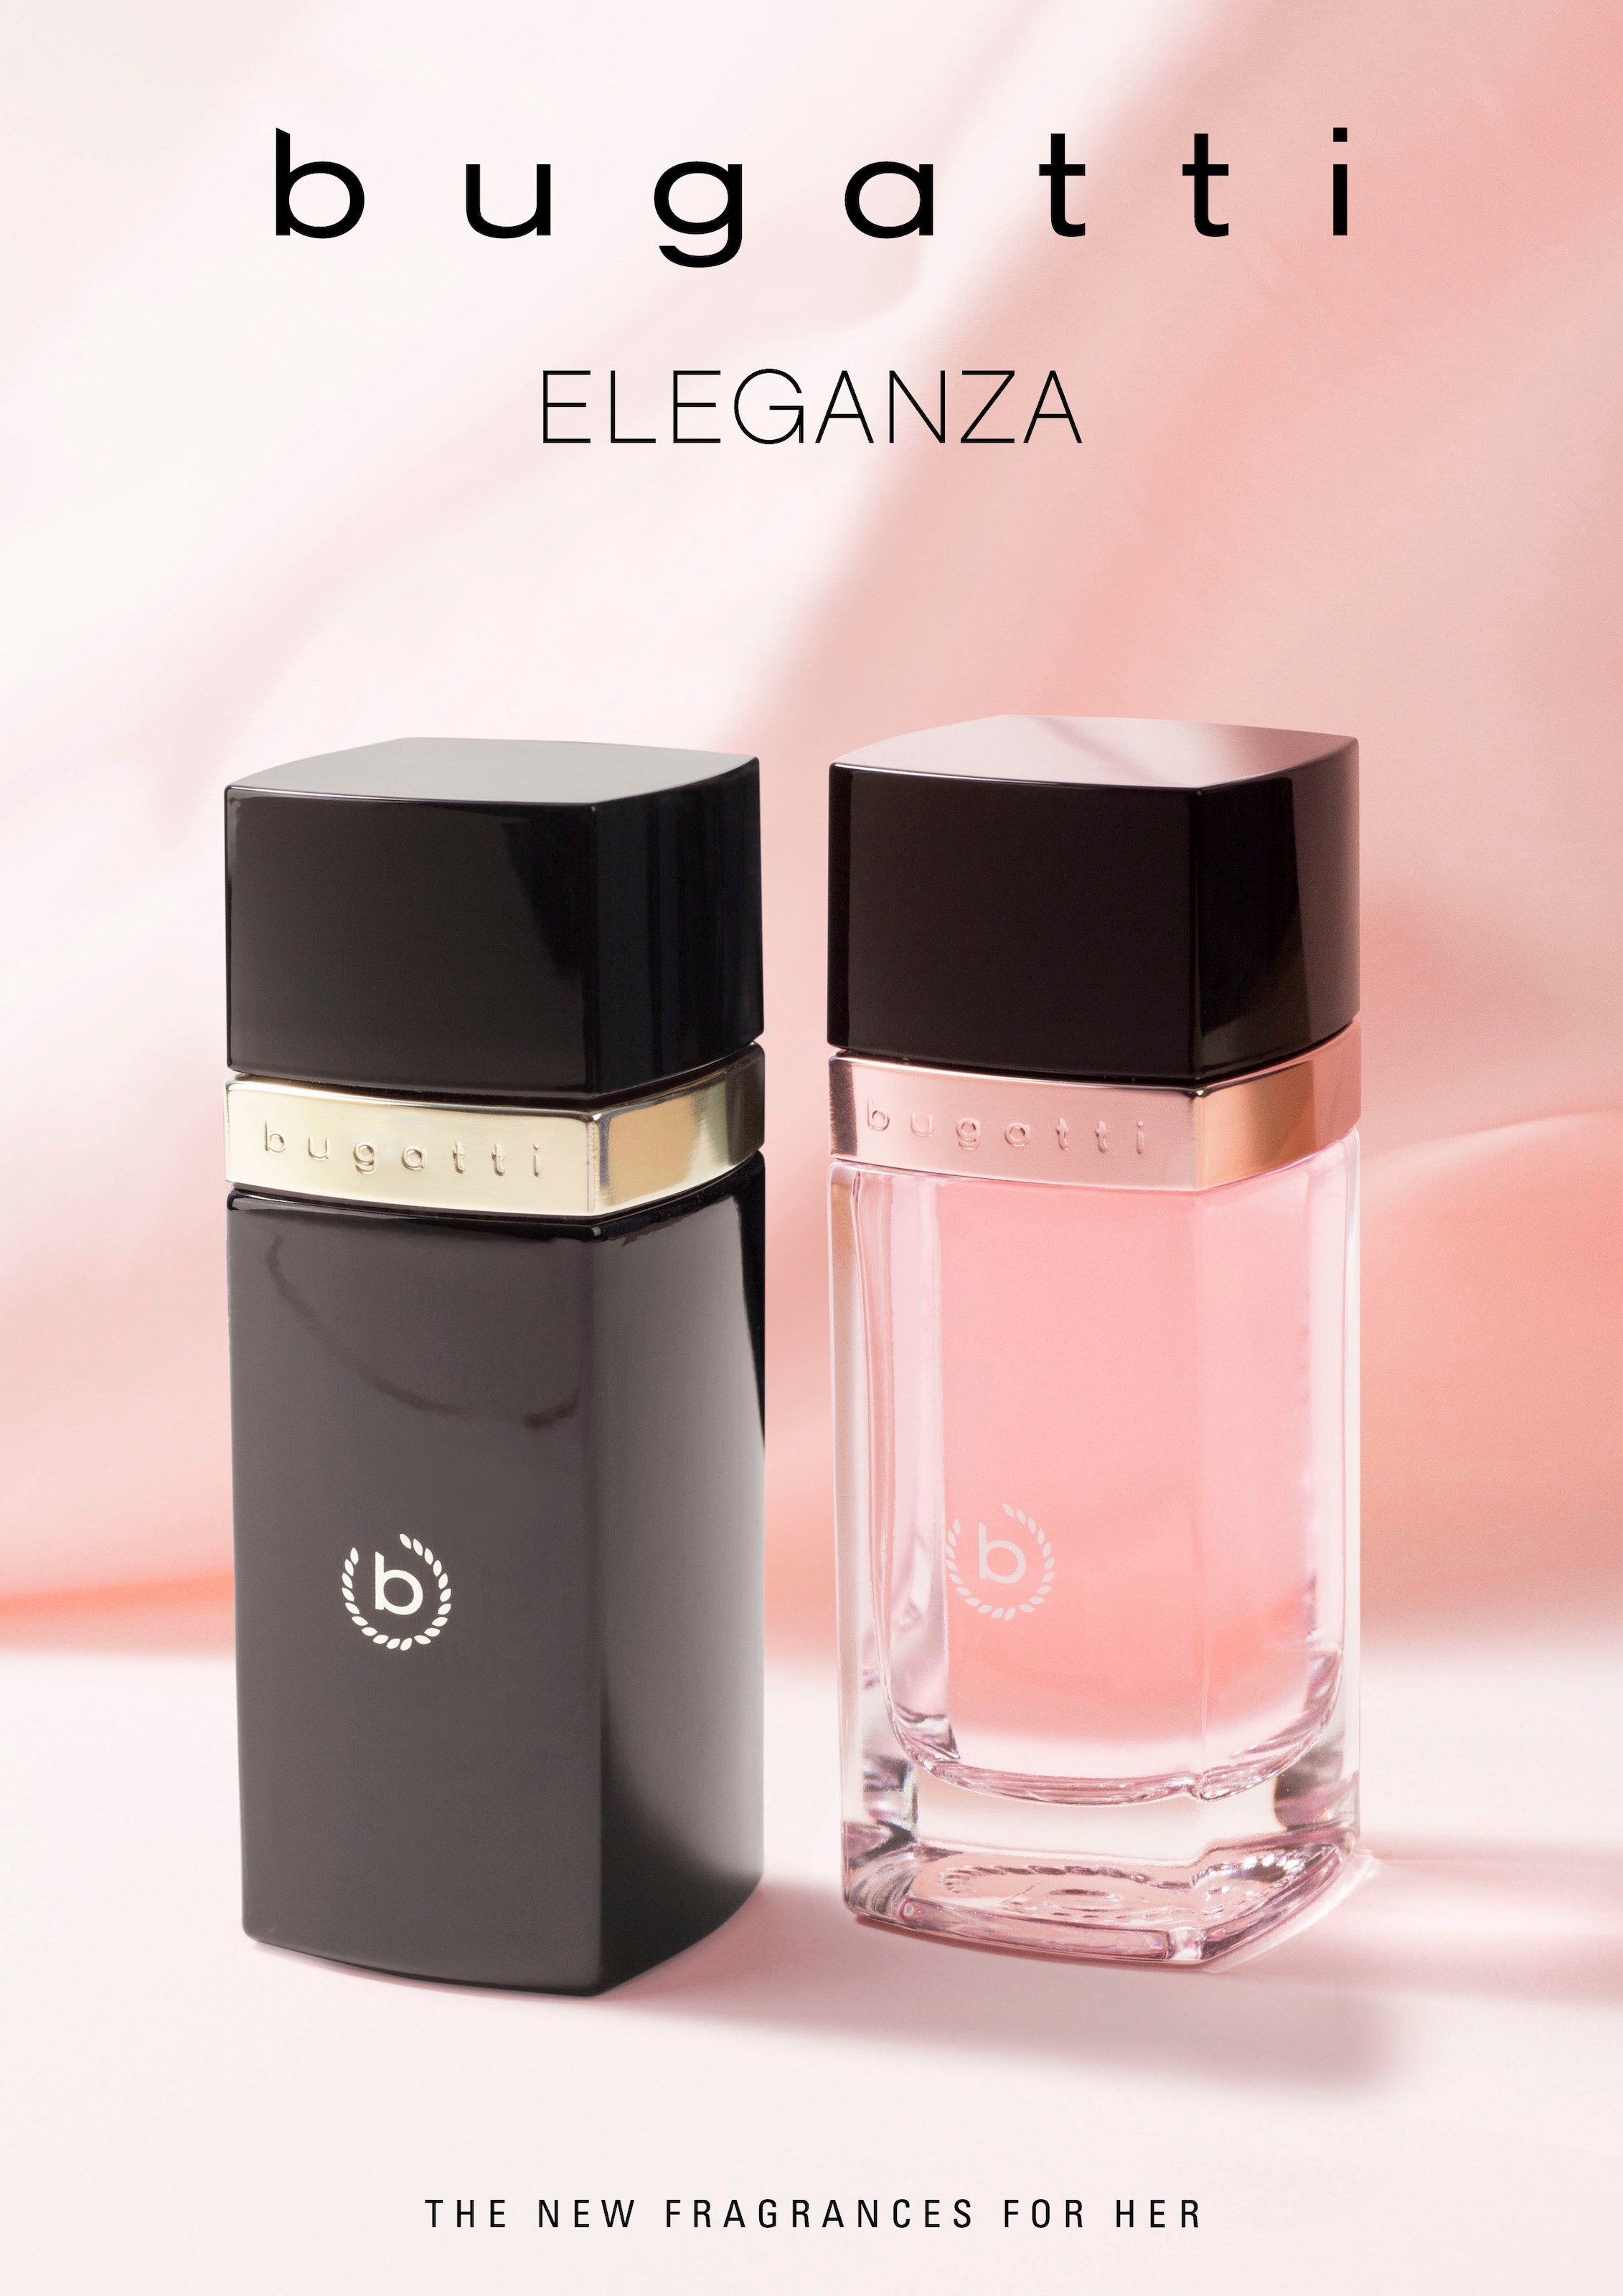 EdP im Online-Shop bestellen »Eleganza bugatti ml« Eau Parfum de 60